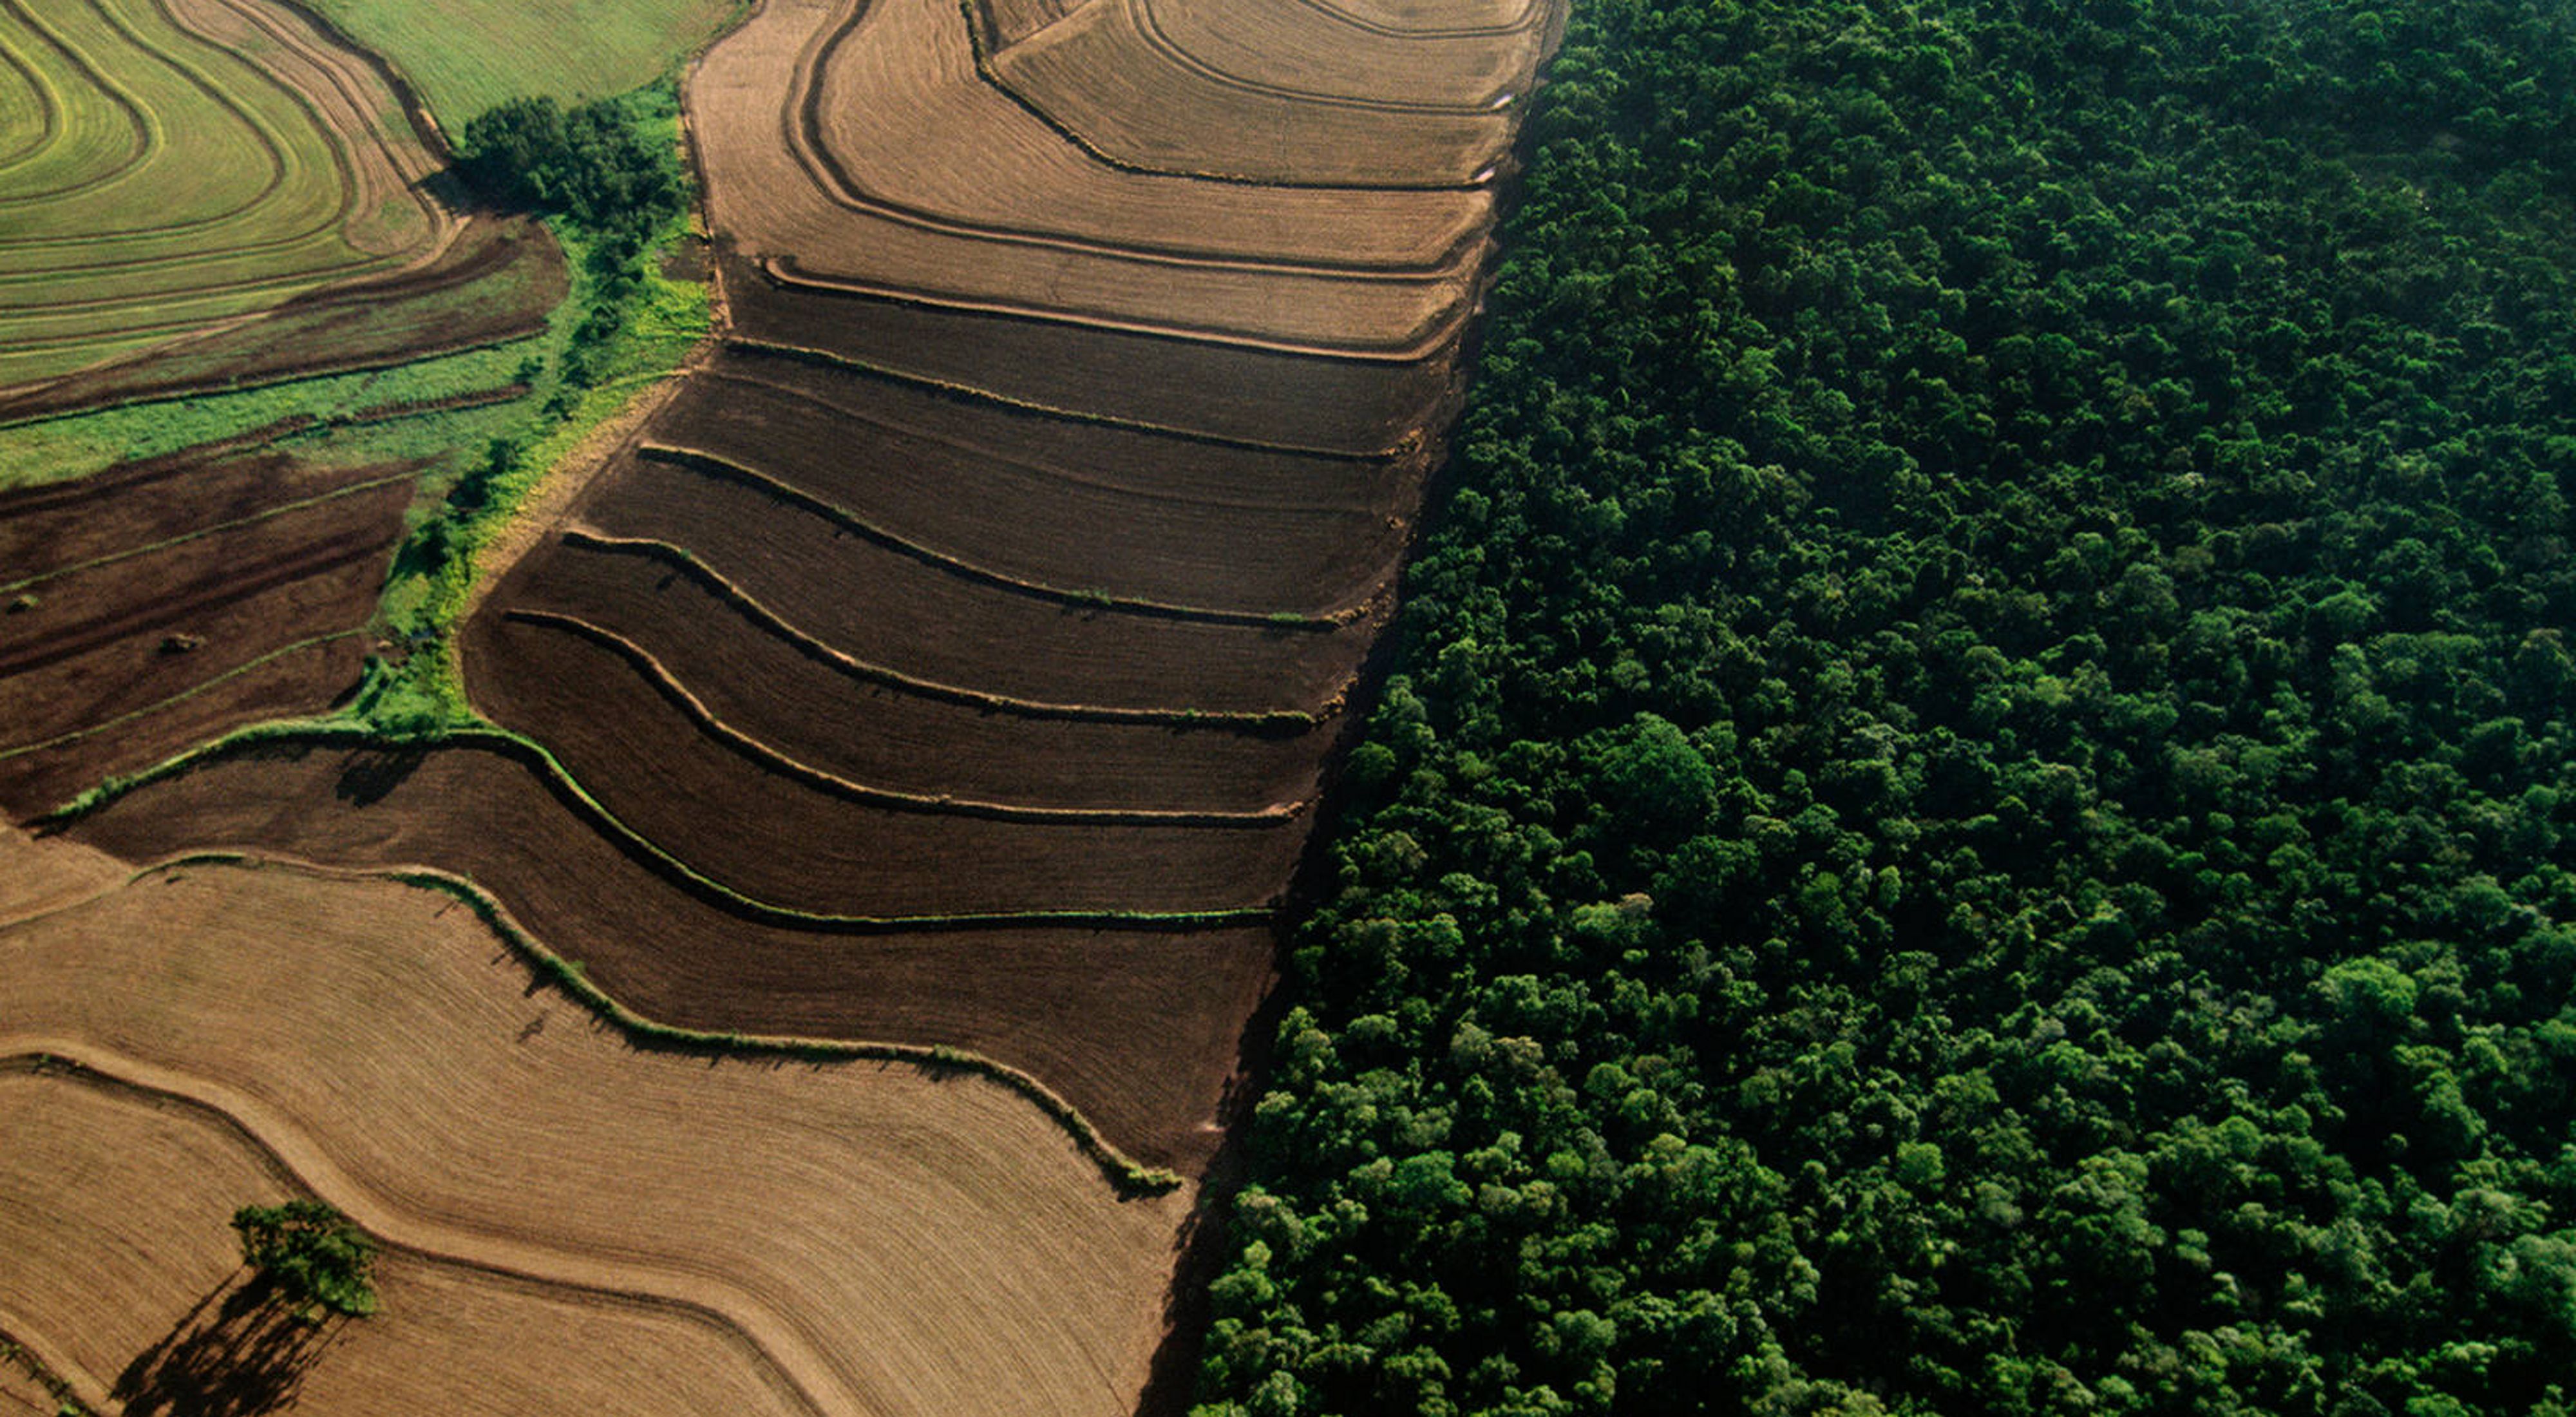 Industrial farmland surrounding cerrado habitat, Emas National Park, Brazil.